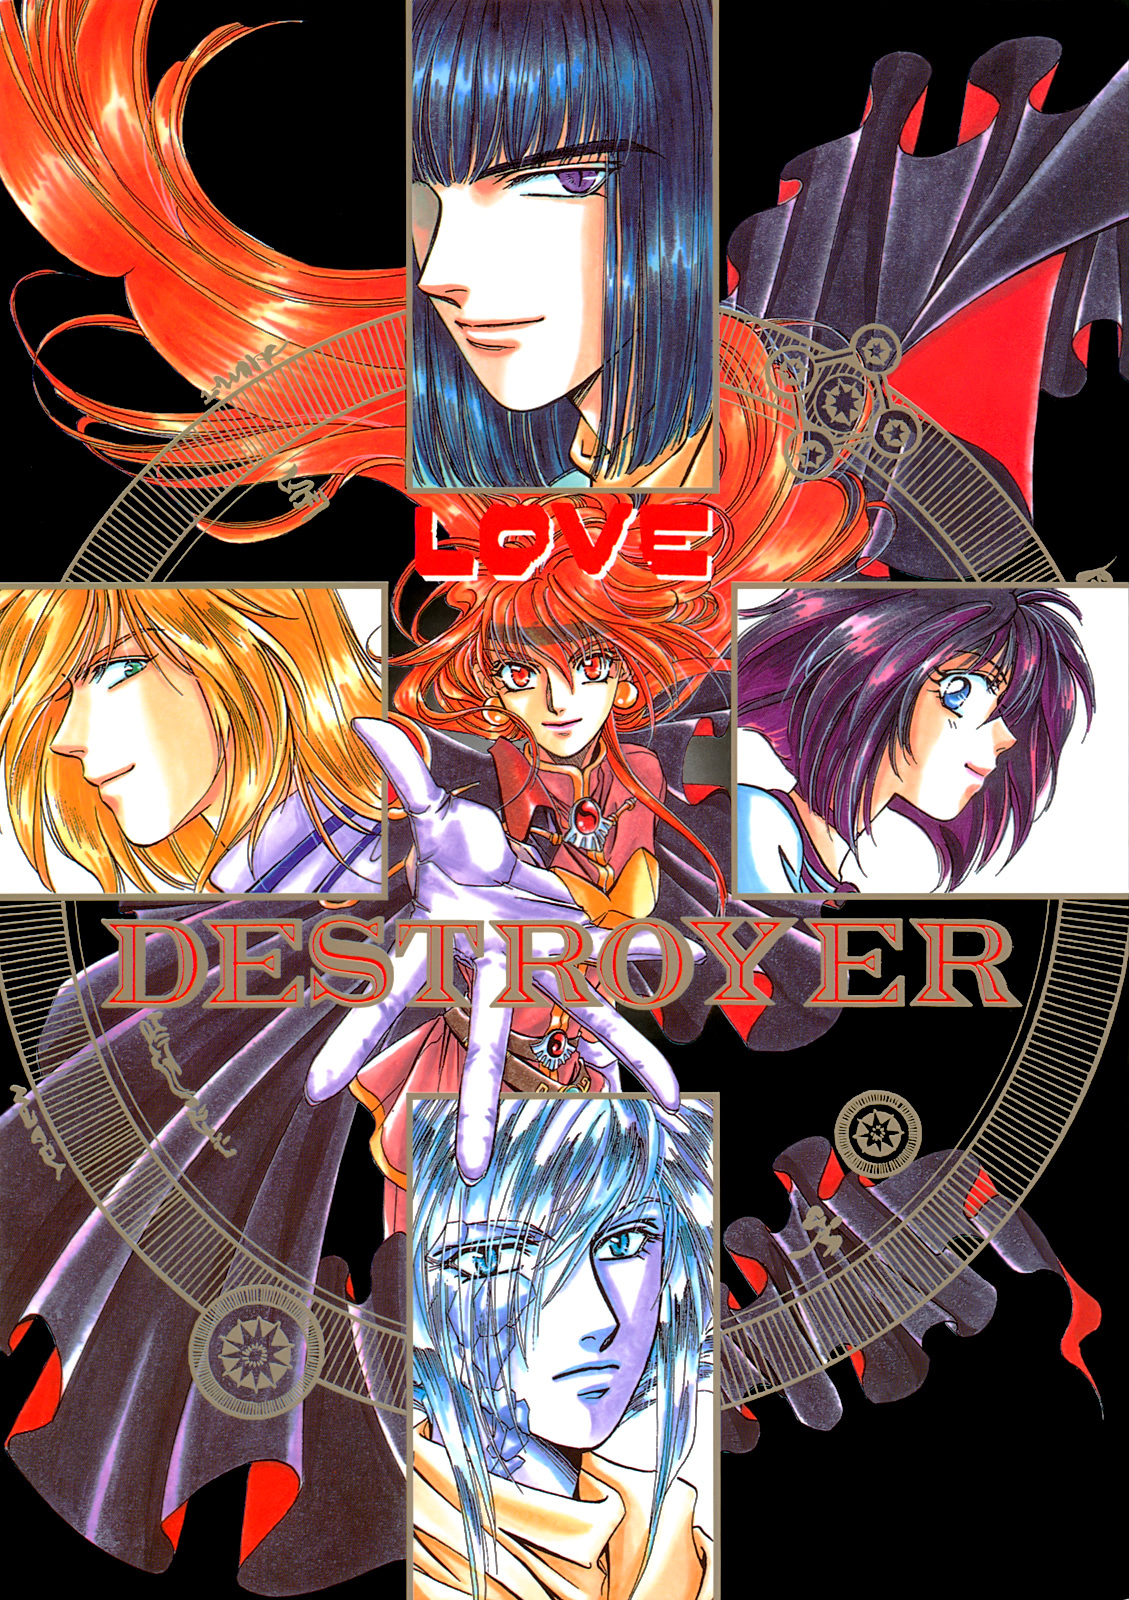 Slayers Love Destroyer (Doujinshi) Oneshot